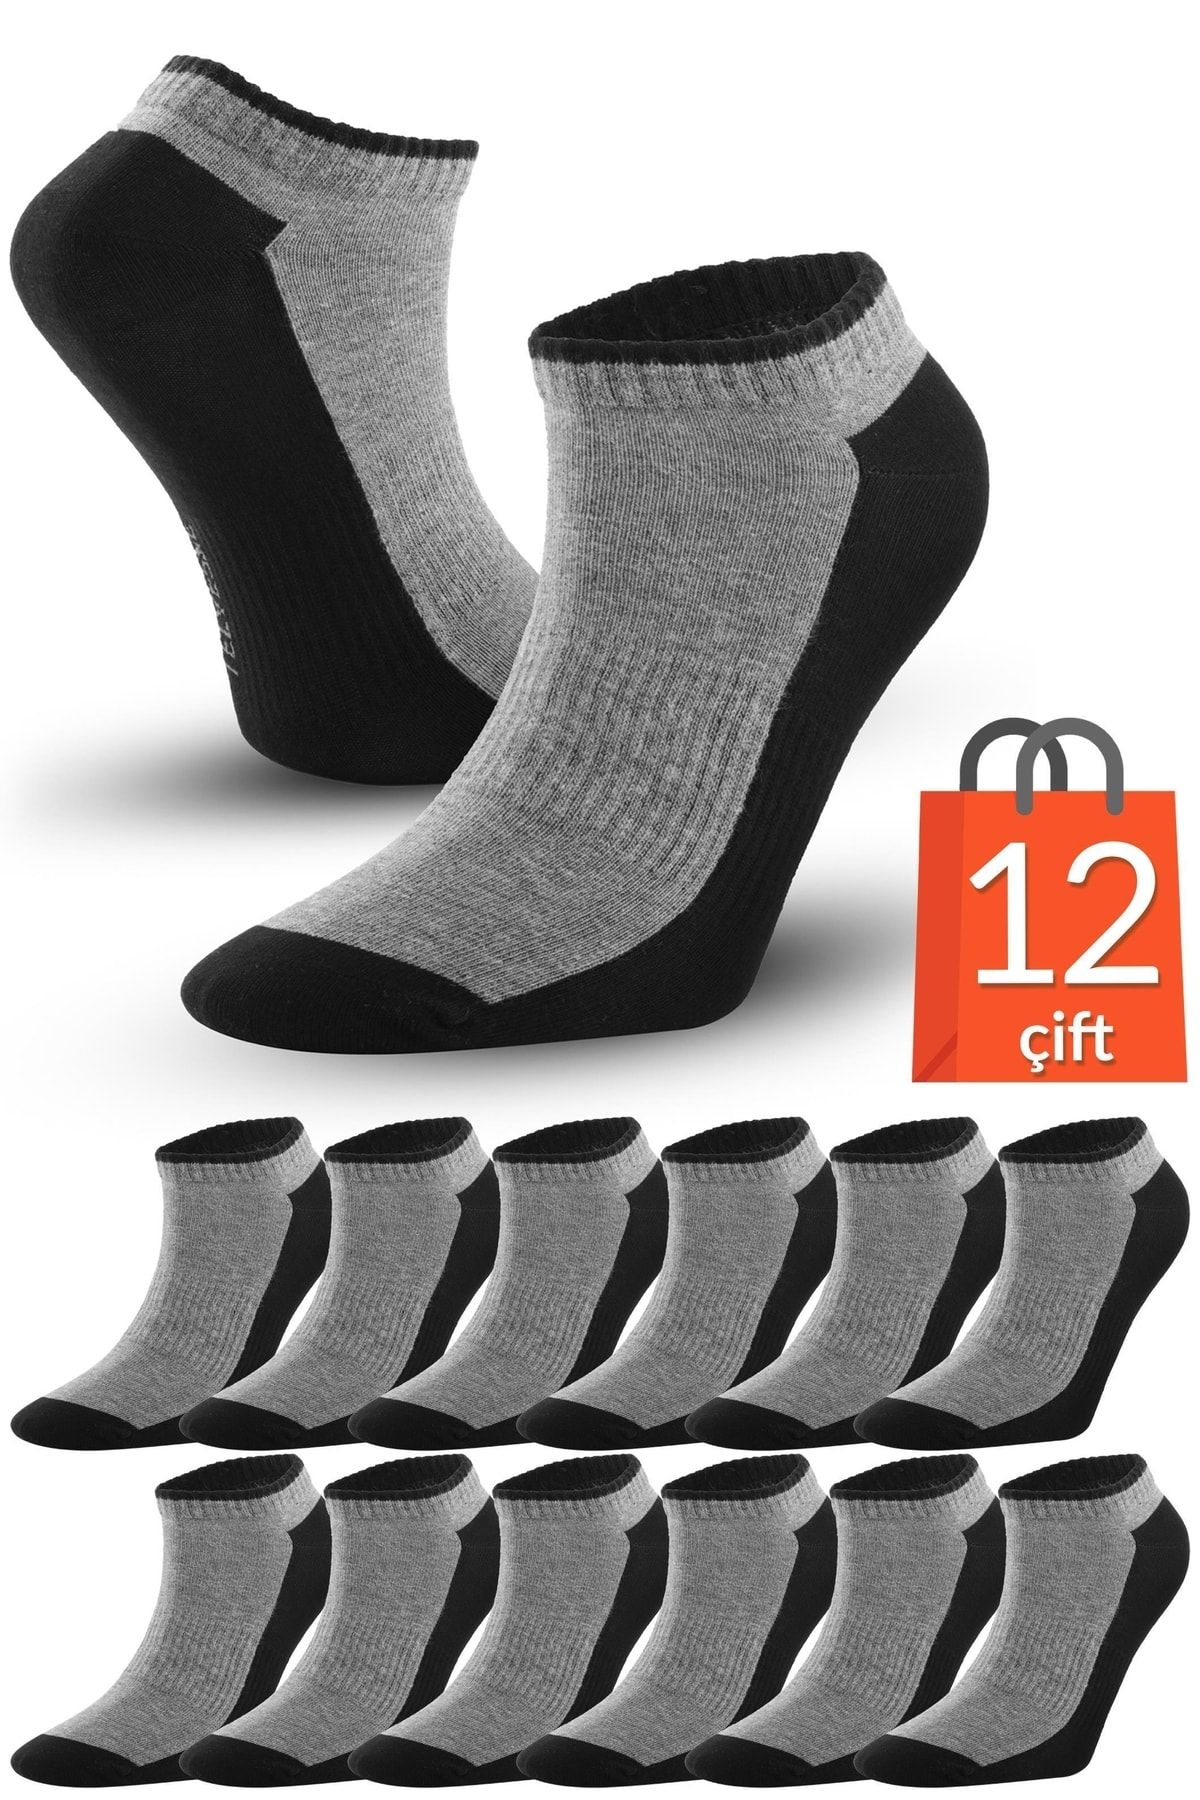 Telvesse 12 Çift Marcher Dikişsiz Patik Çorap Spor Kısa Çift Renkli Kısa Konç Spor Çorabı Siyah-gri